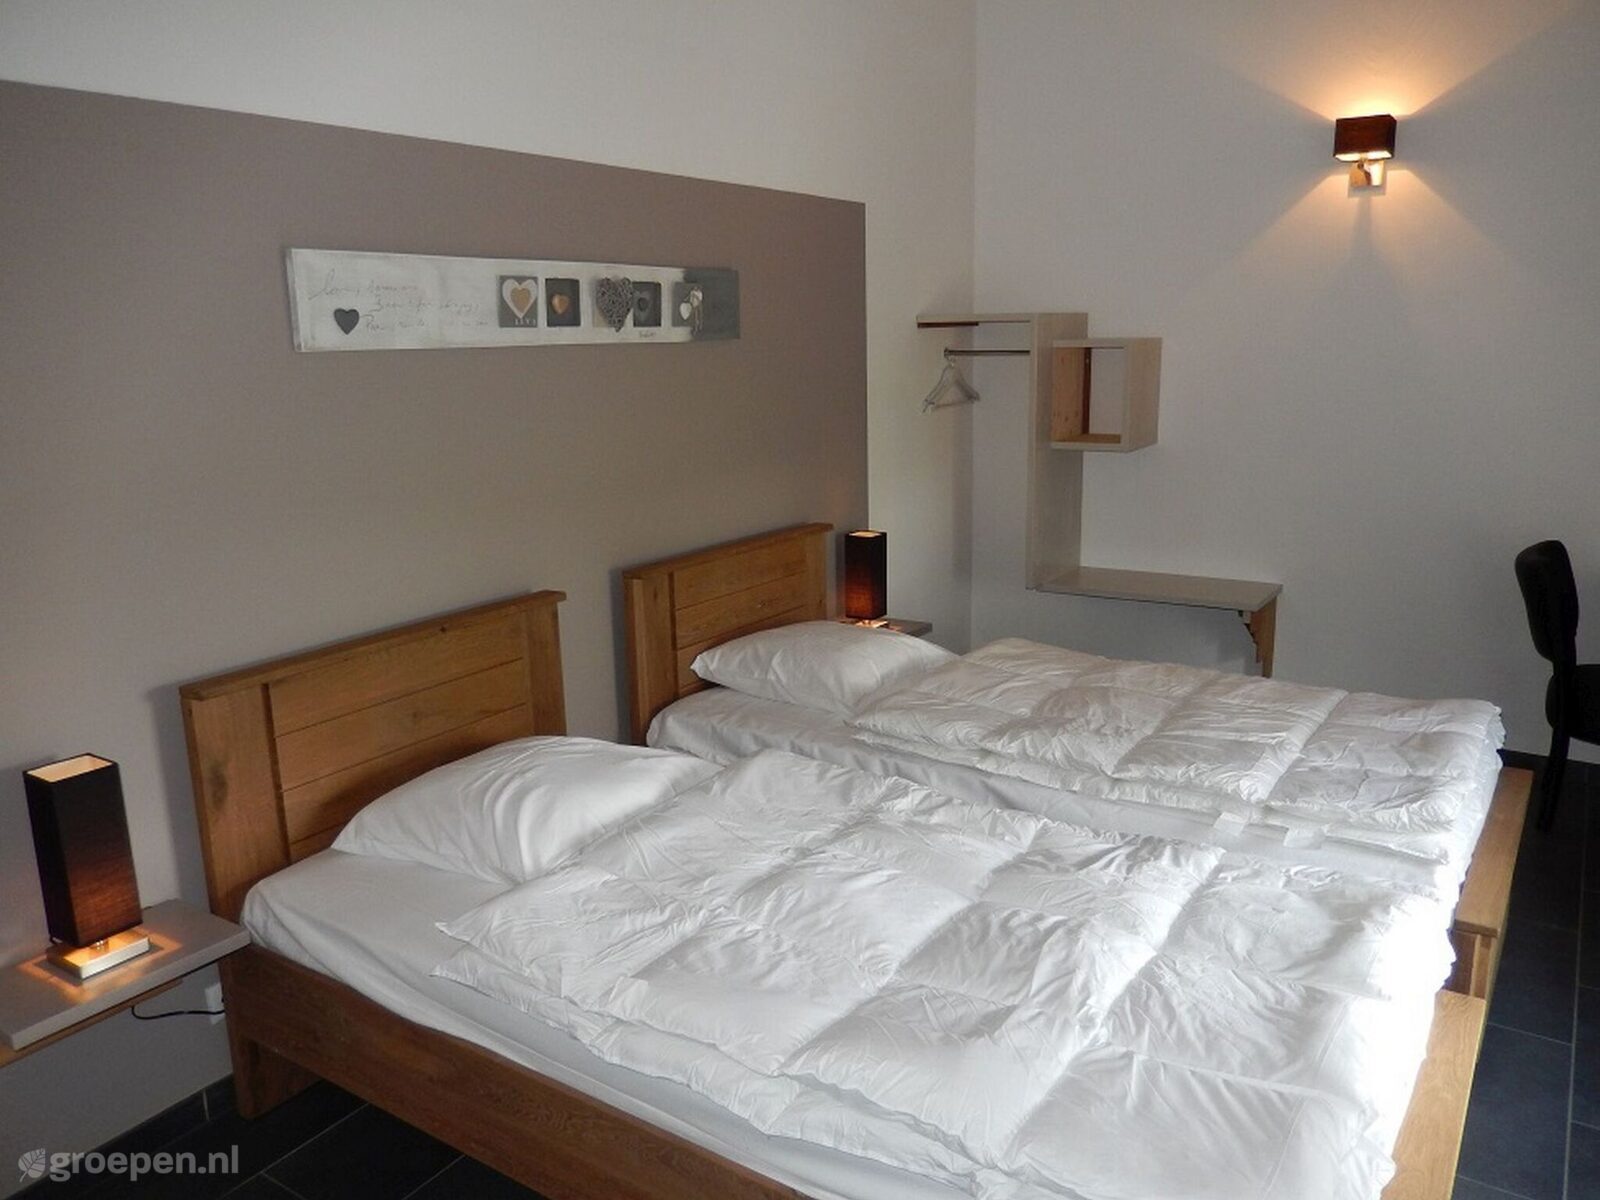 Group accommodation Saint-Jacques